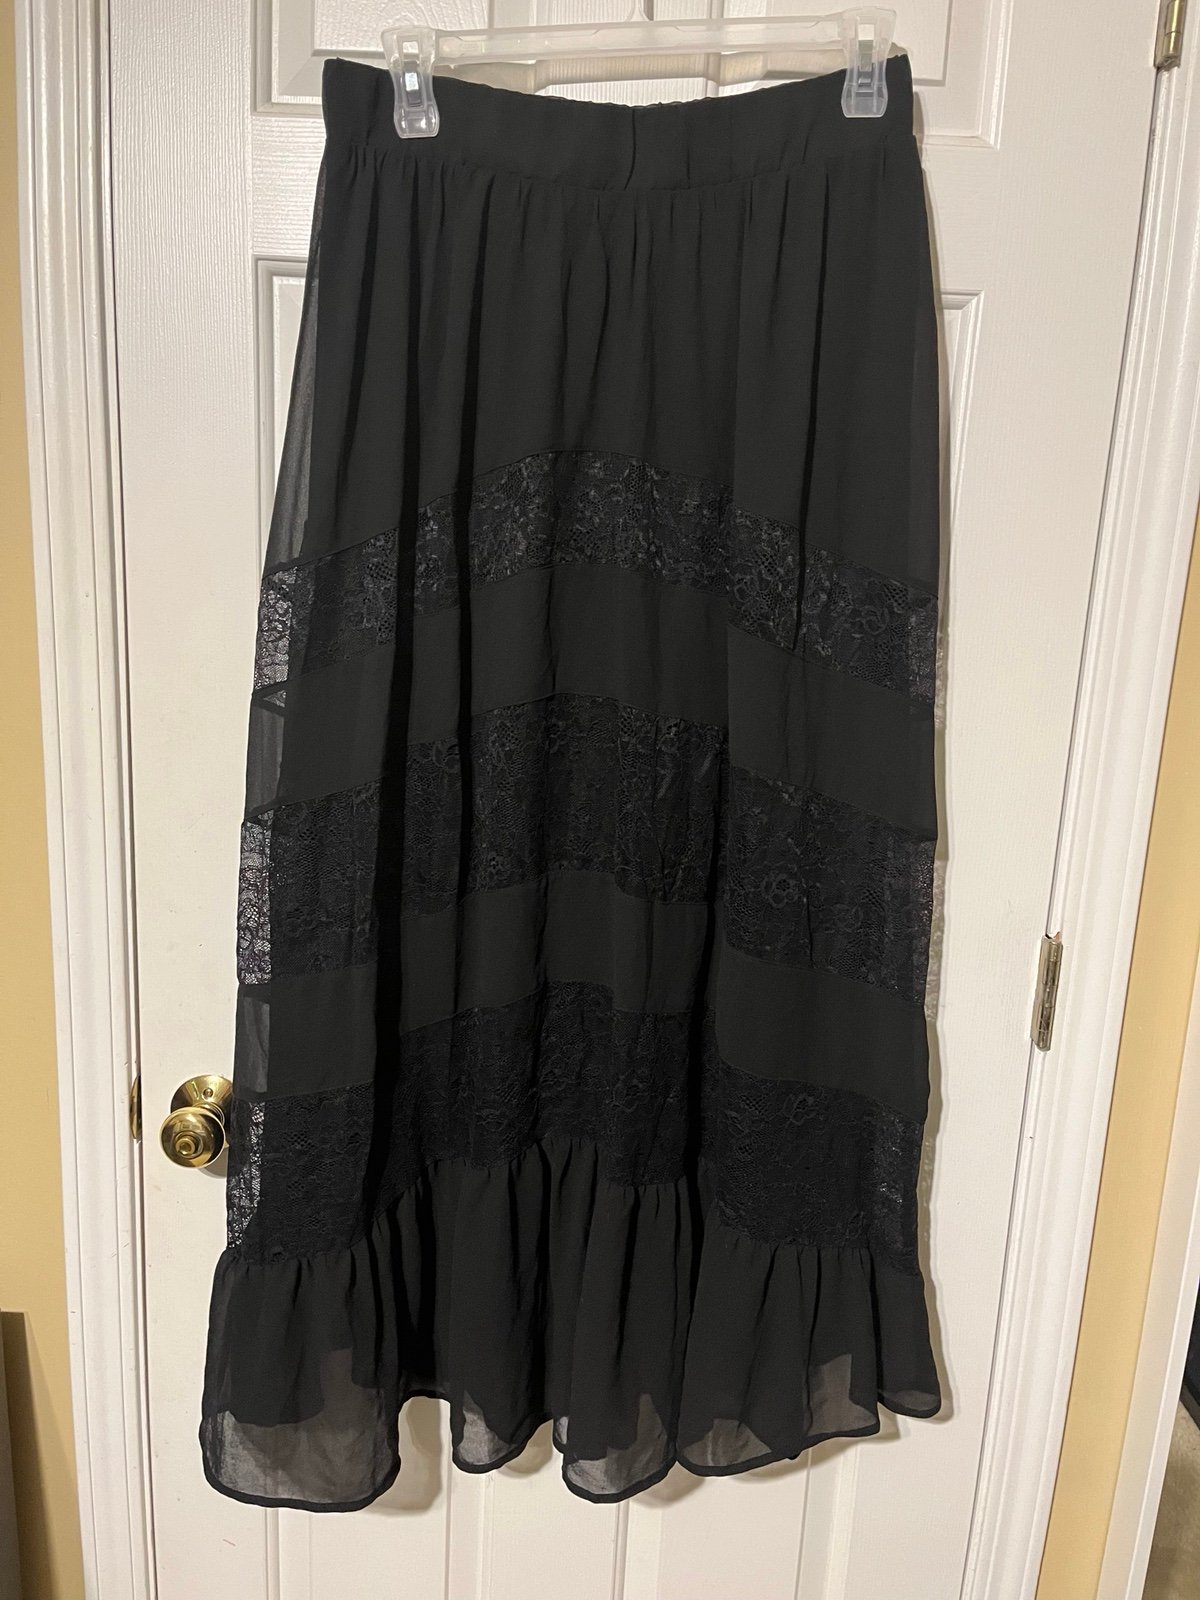 Black Lace Long Maxi Skirt Torrid 0ATaw1yTT